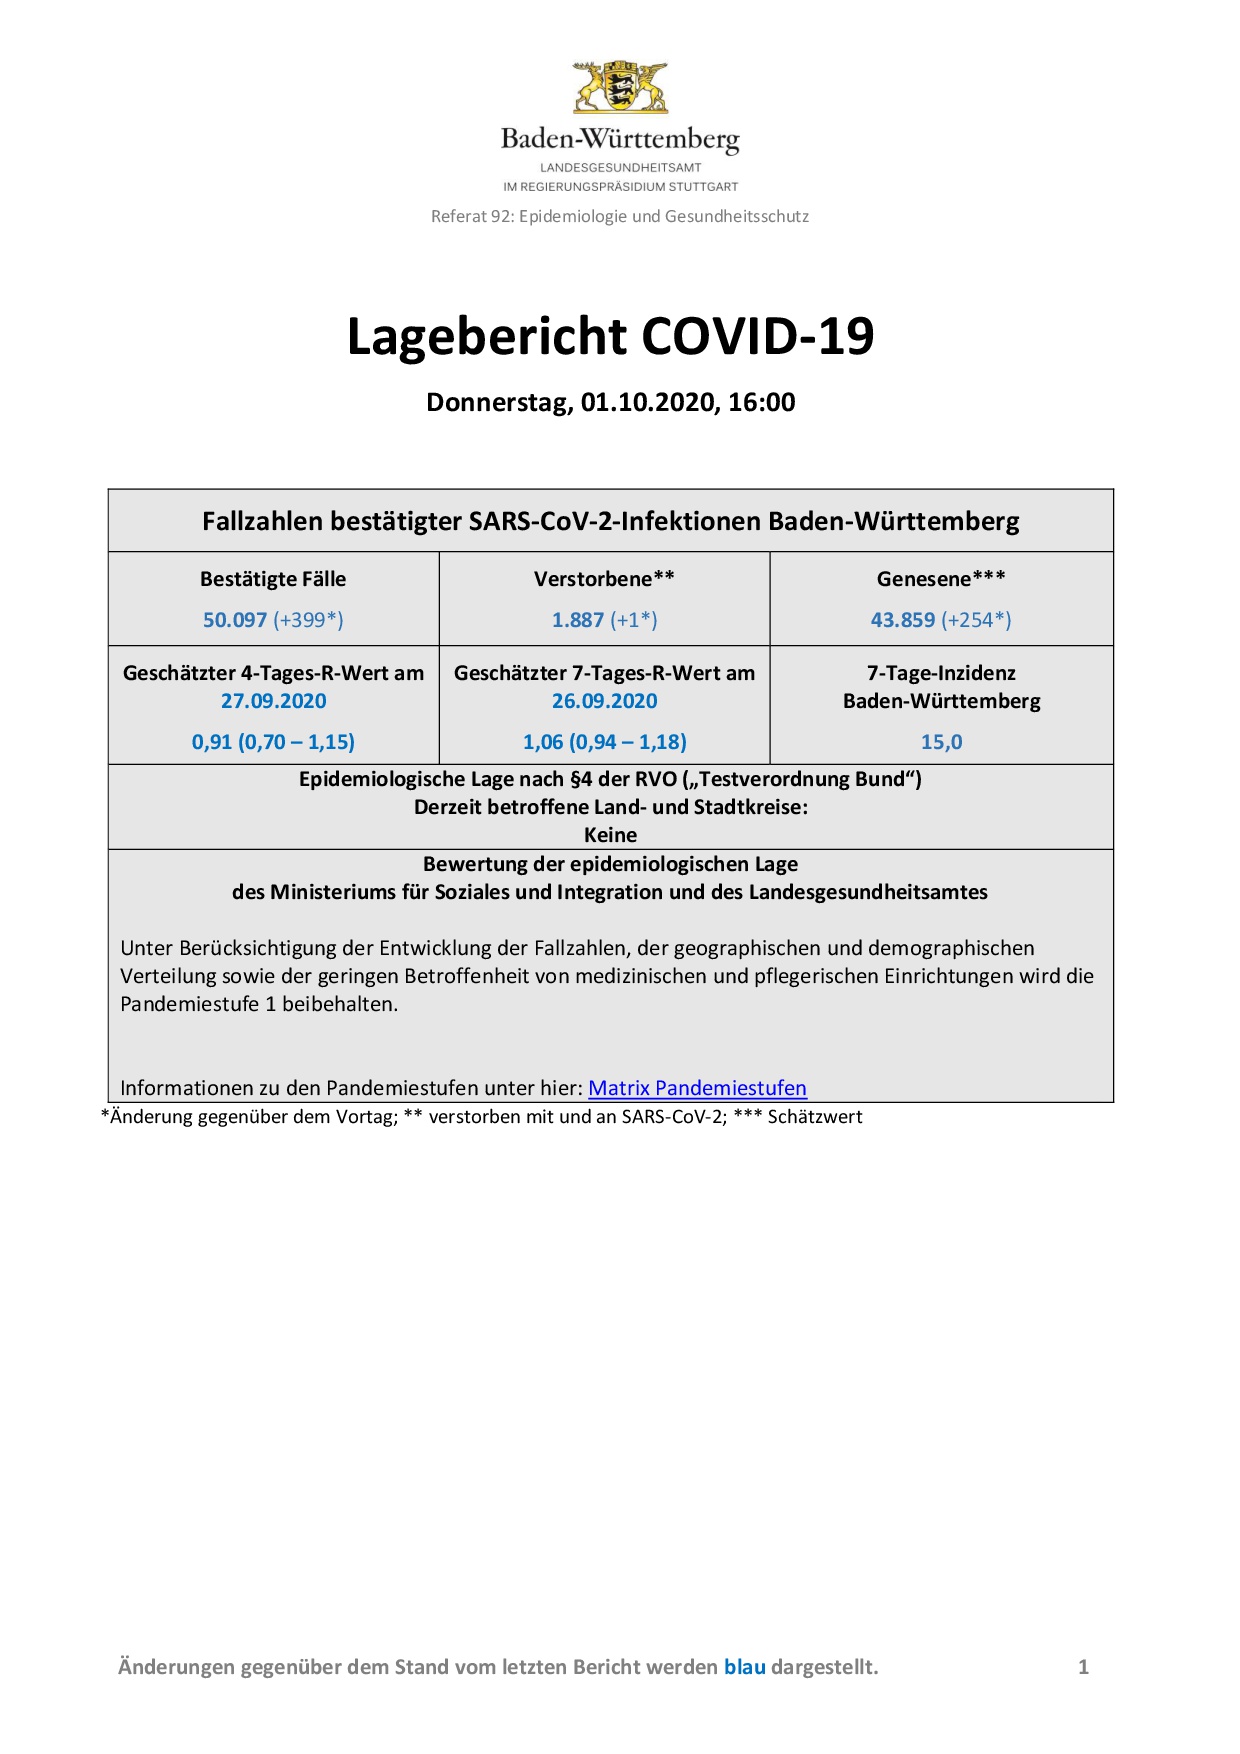 COVID-19 Tagesbericht (01.10.2020) des Landesgesundheitsamts Baden-Württemberg